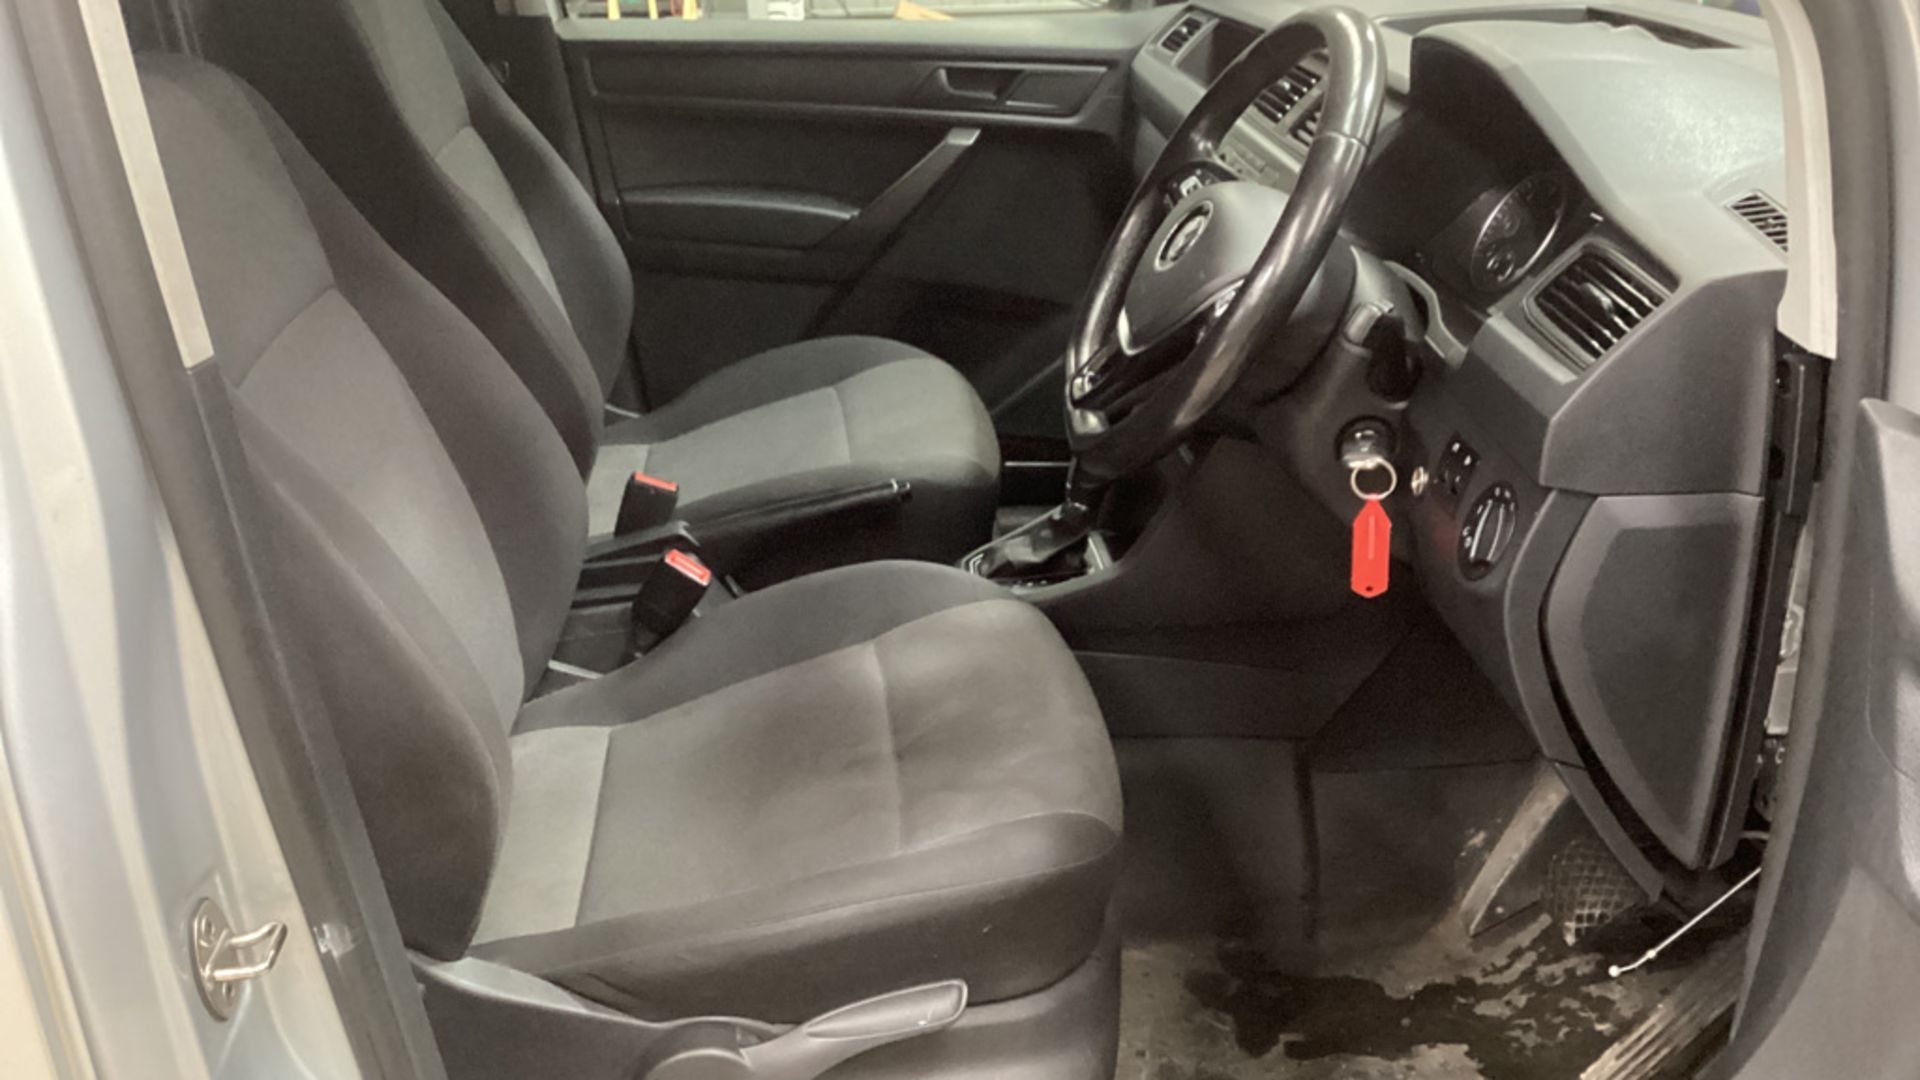 ** ON SALE ** Volkswagen Caddy Maxi 2.0 TDI BlueMotion DSG Automatic 2019 '19 Reg' - Panel Van - Image 7 of 8